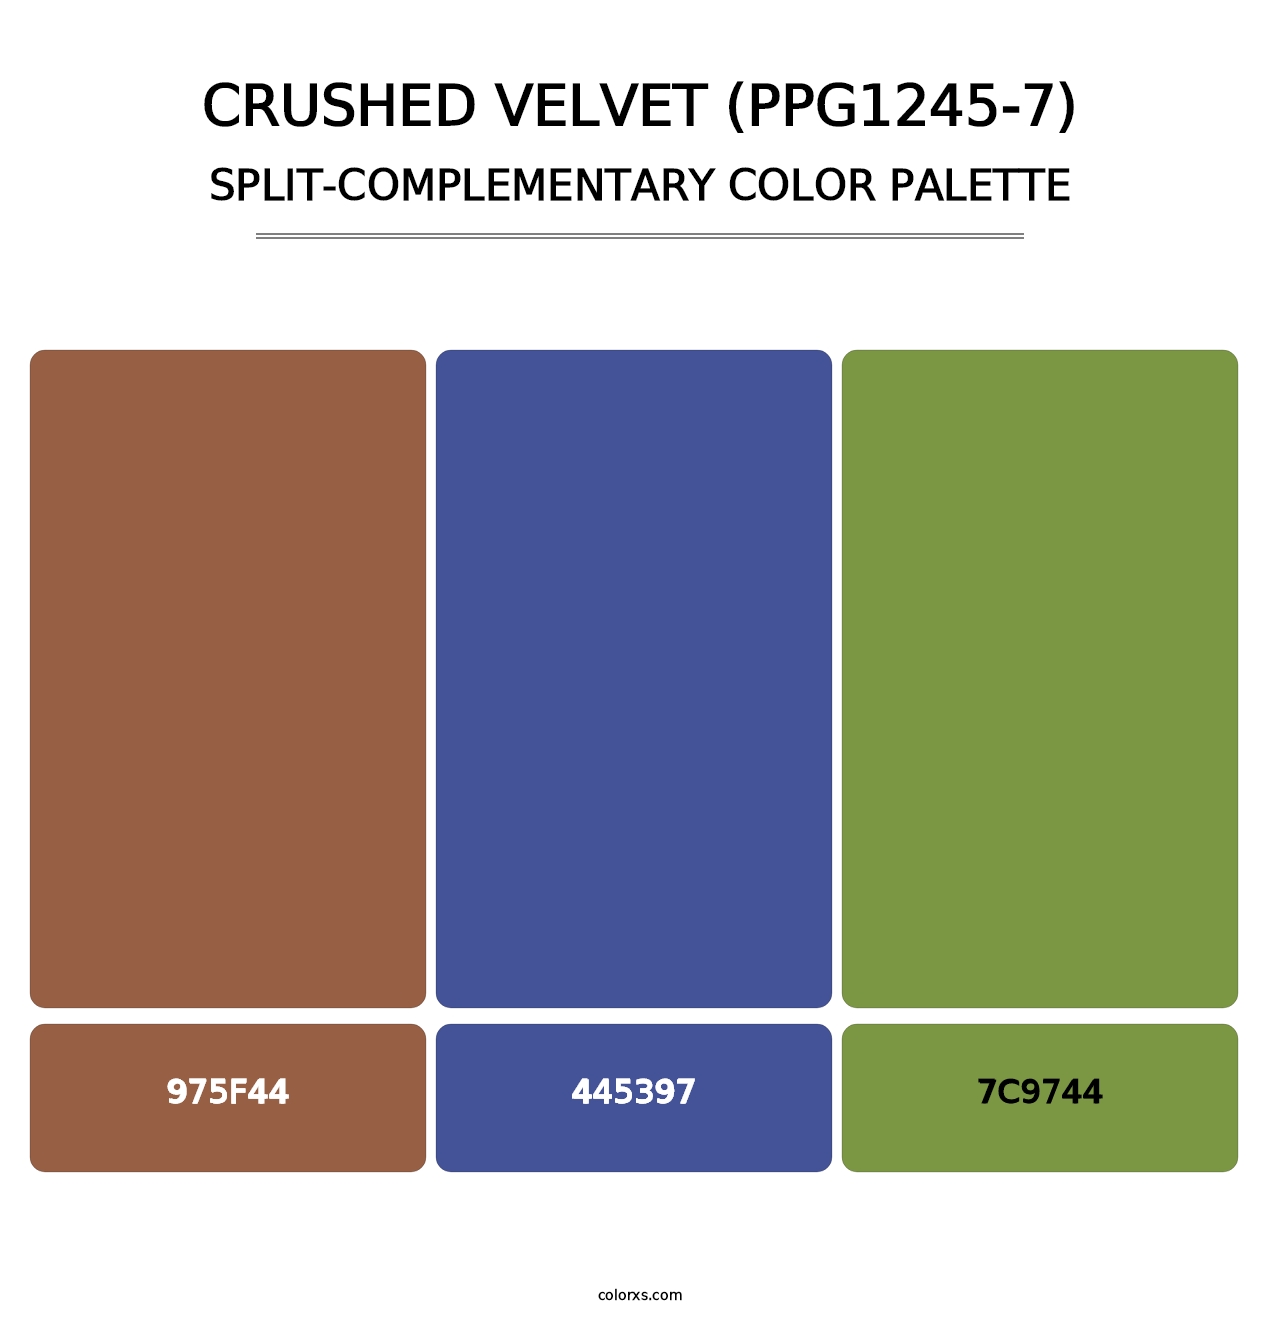 Crushed Velvet (PPG1245-7) - Split-Complementary Color Palette